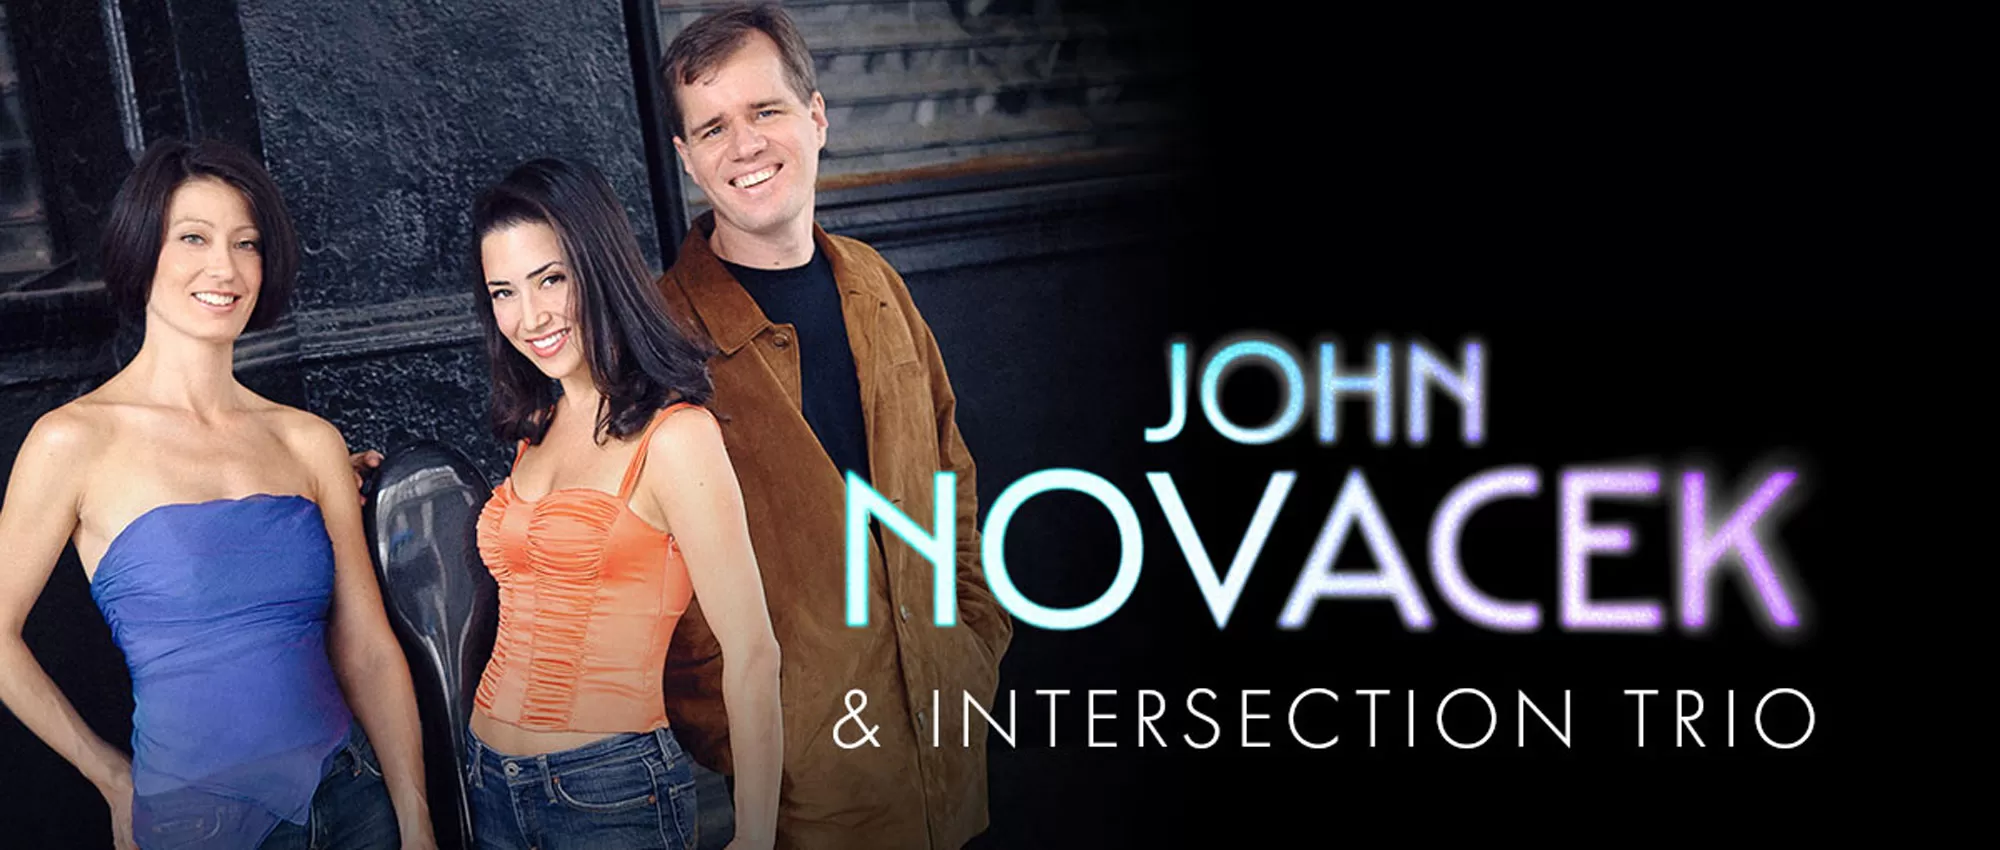 John Novacek & Intersection